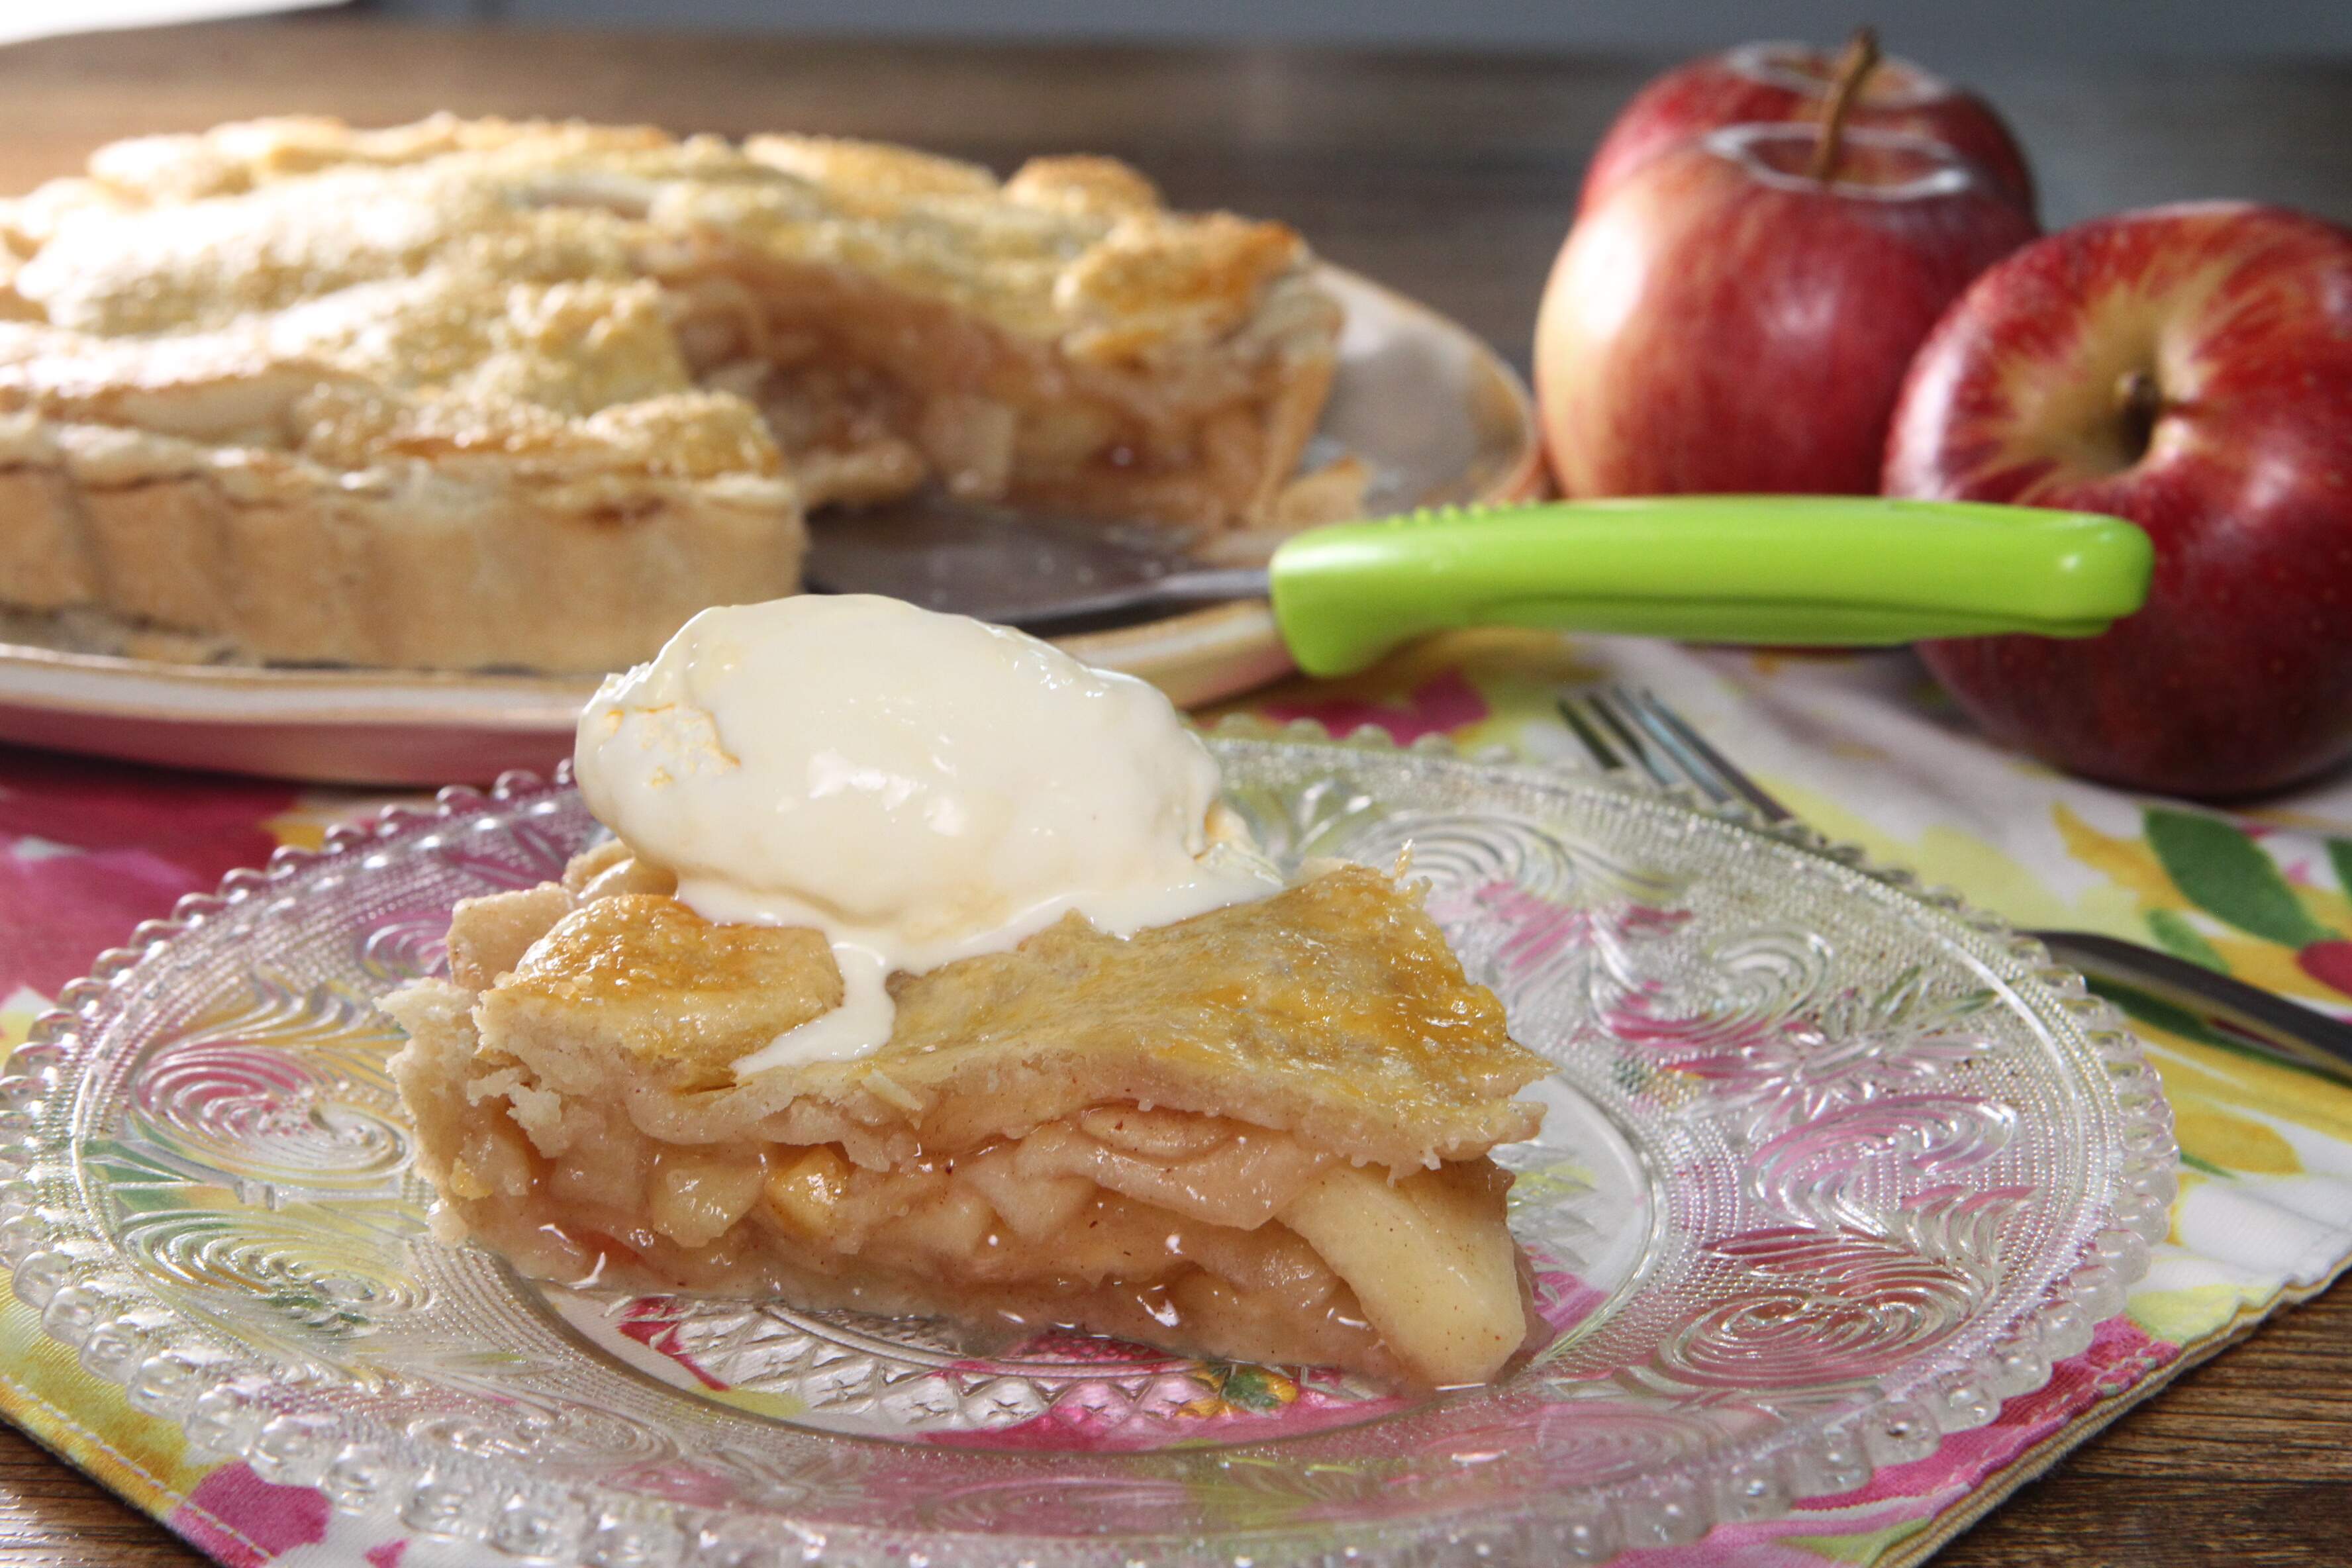 Torta de maçã ao estilo norte-americano; a famosa apple pie